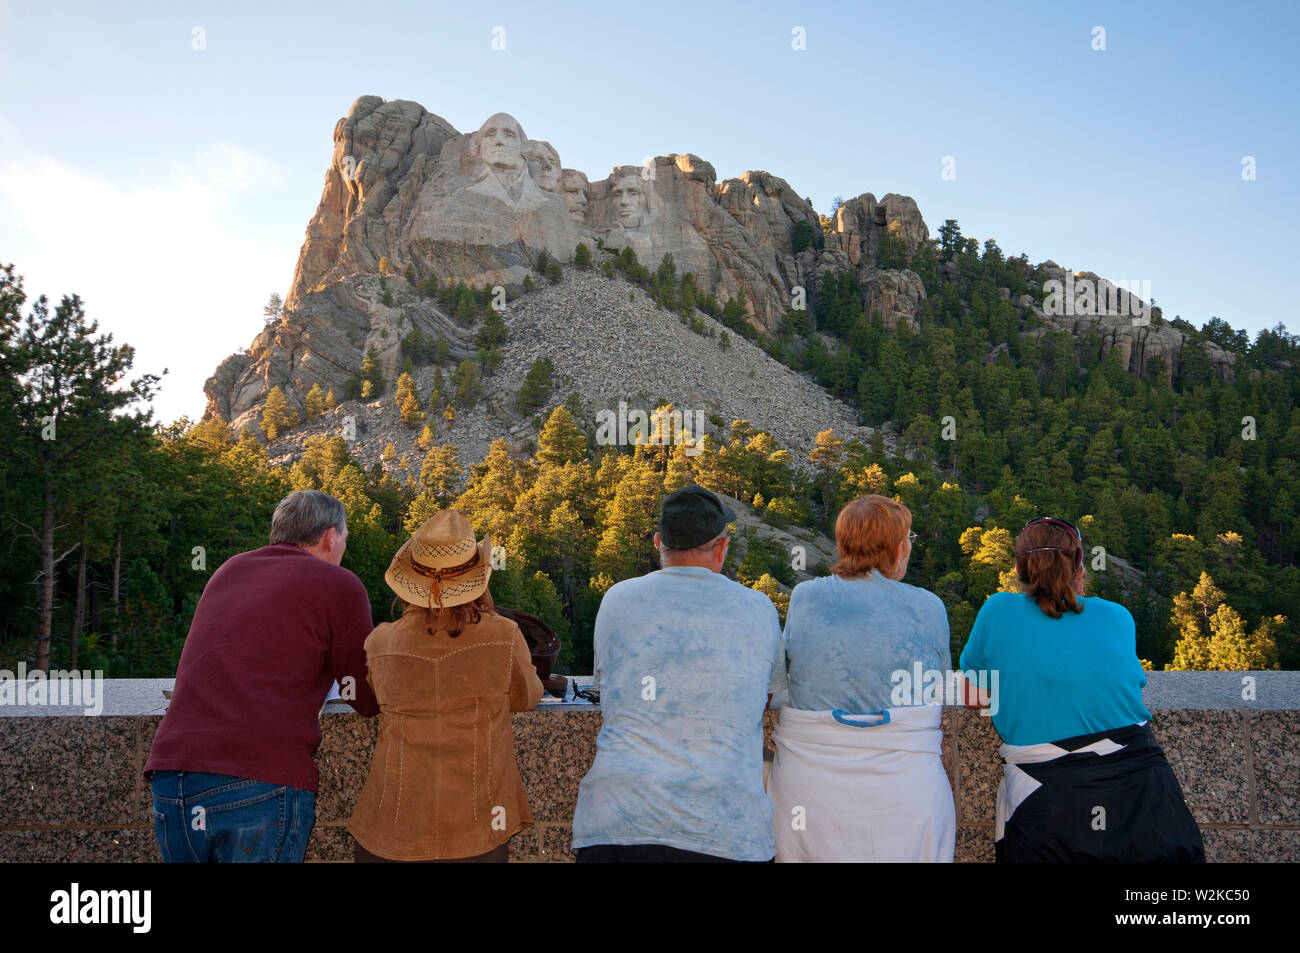 Visitors at Mount Rushmore National Memorial (by sculptor Gutzon Borglum), Black Hills, Keystone, County Pennington, South Dakota, USA Stock Photo